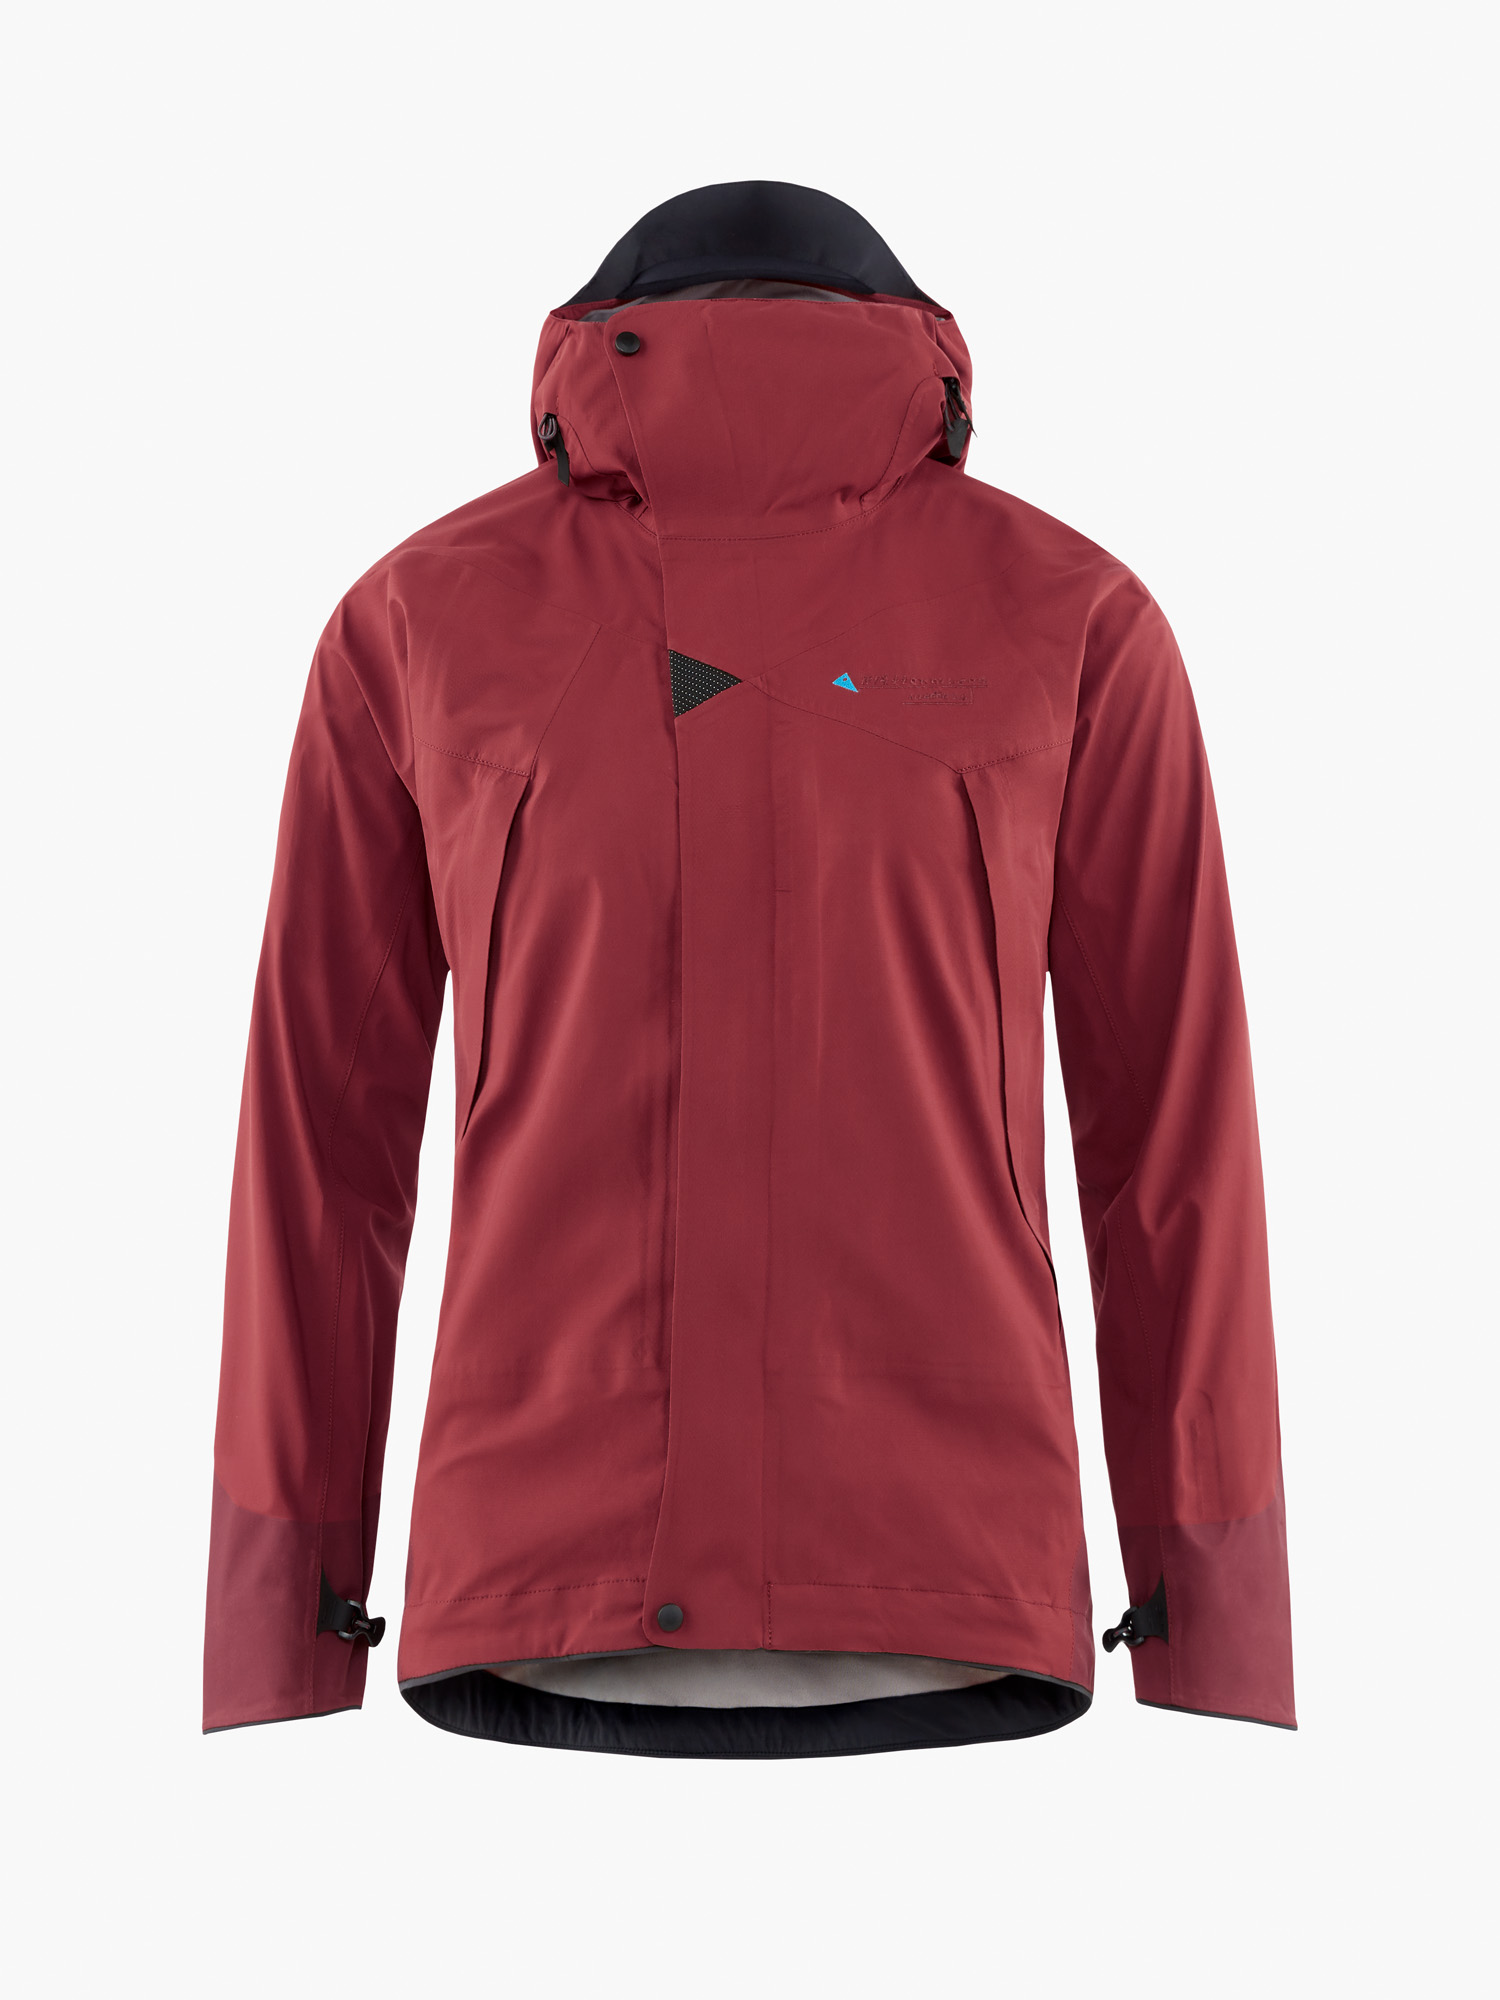 Allgrön 2.0, shell jacket in the color dark red for women